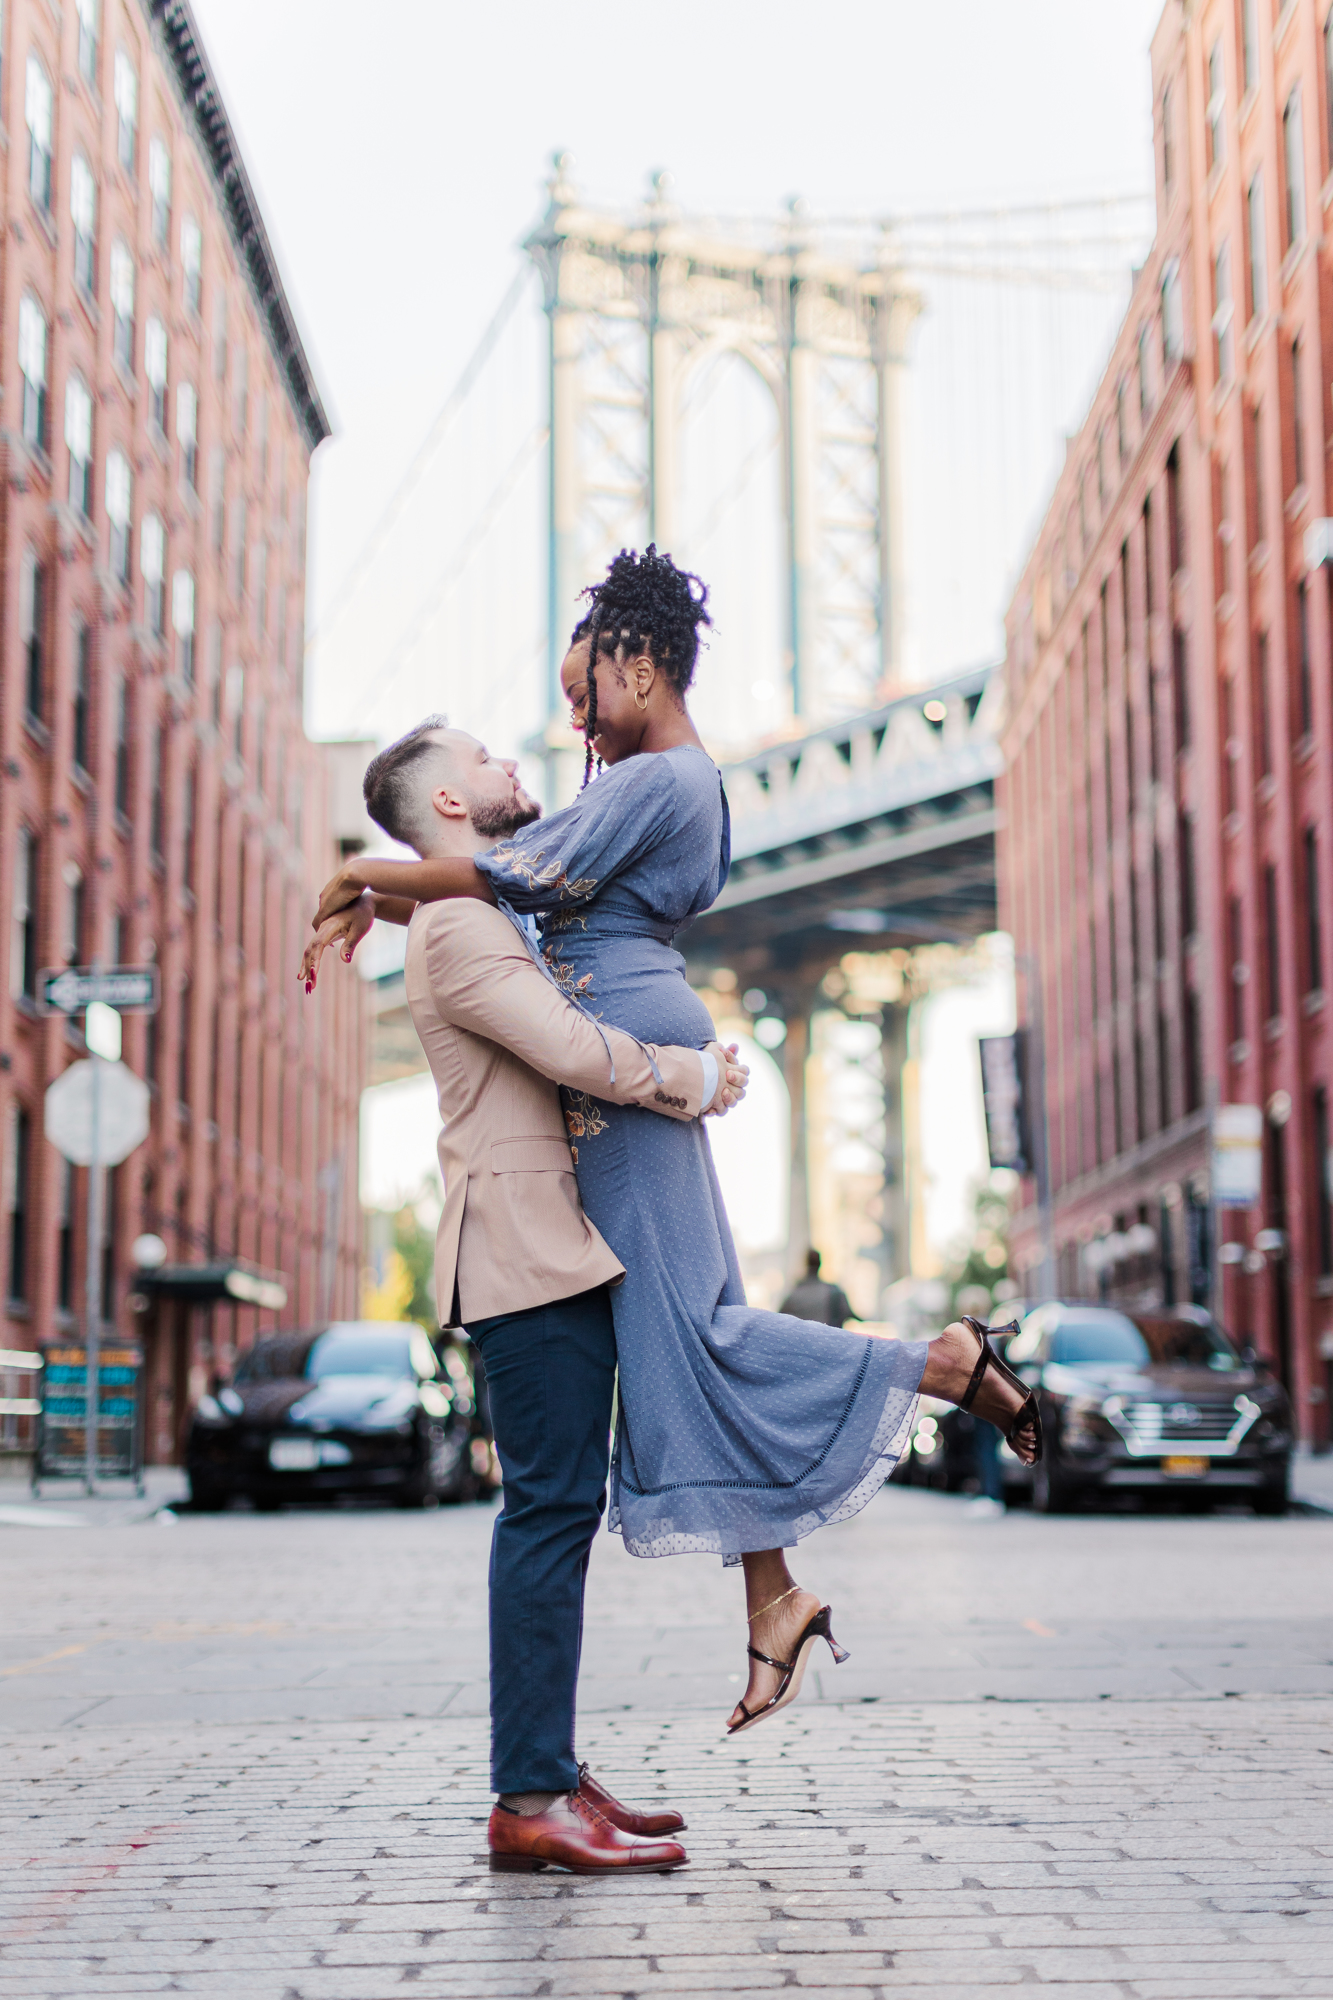 Cheerful Brooklyn Bridge Engagement Photos